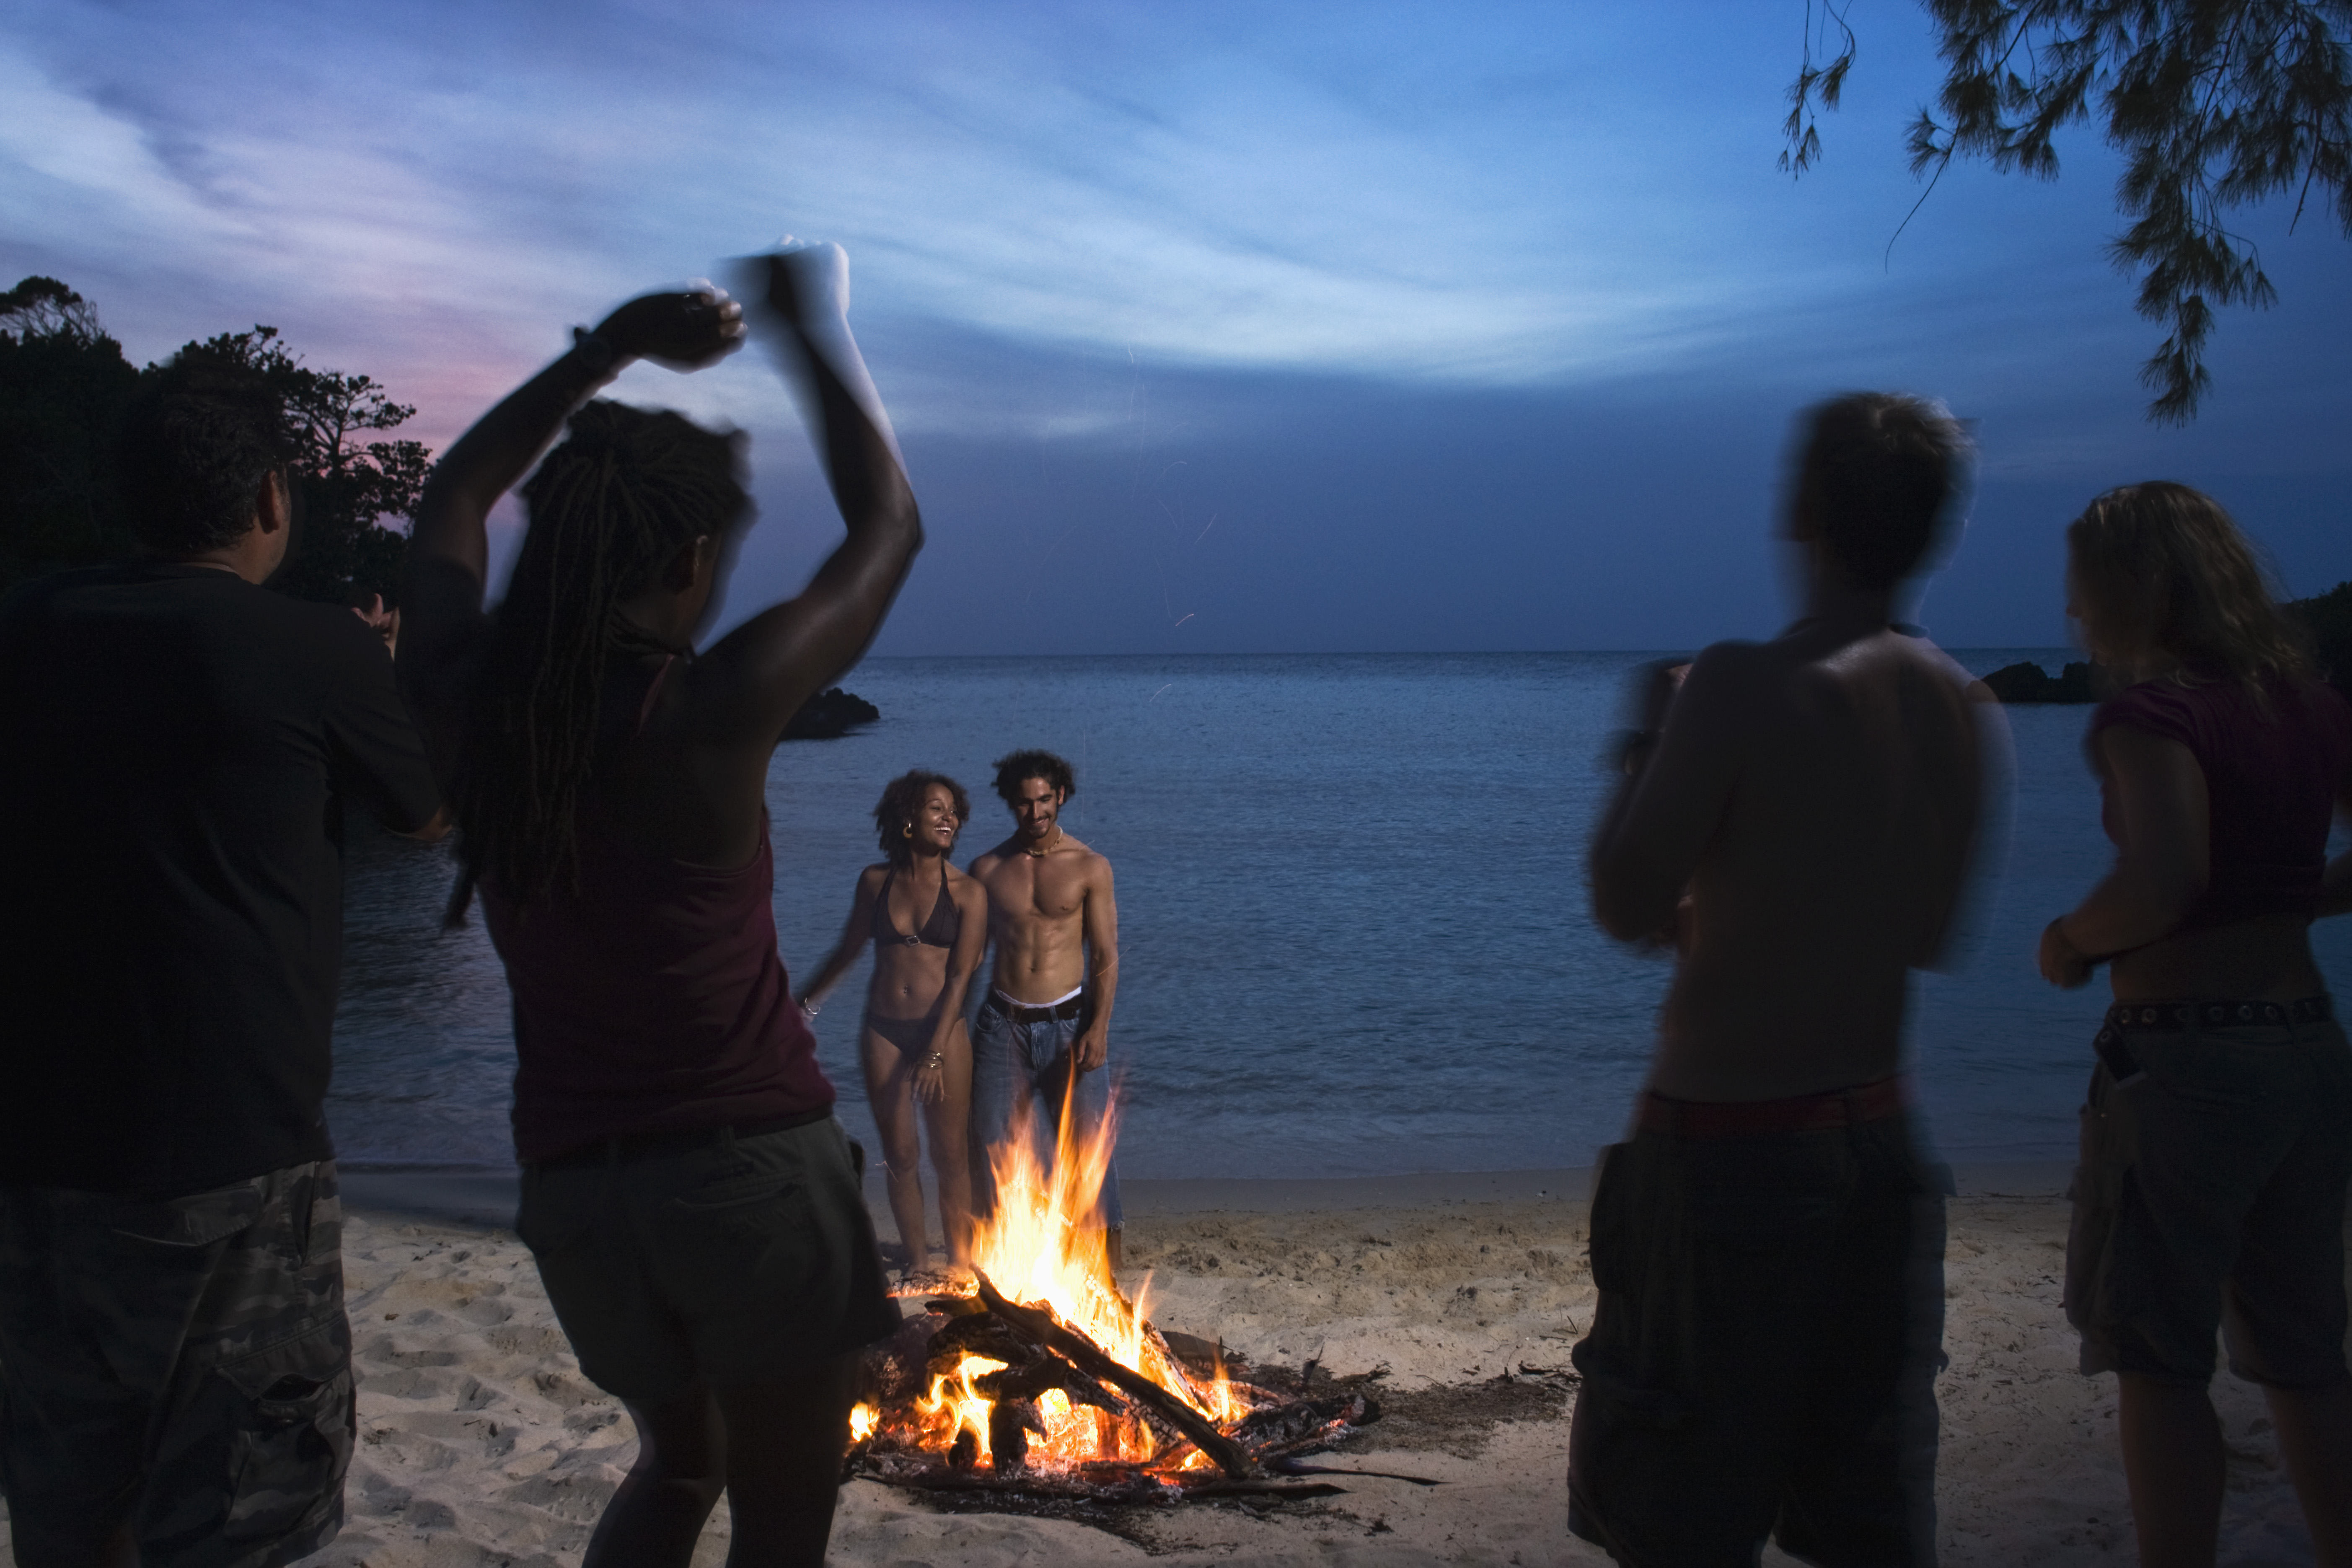 Beach bonfire. | Source Getty Images